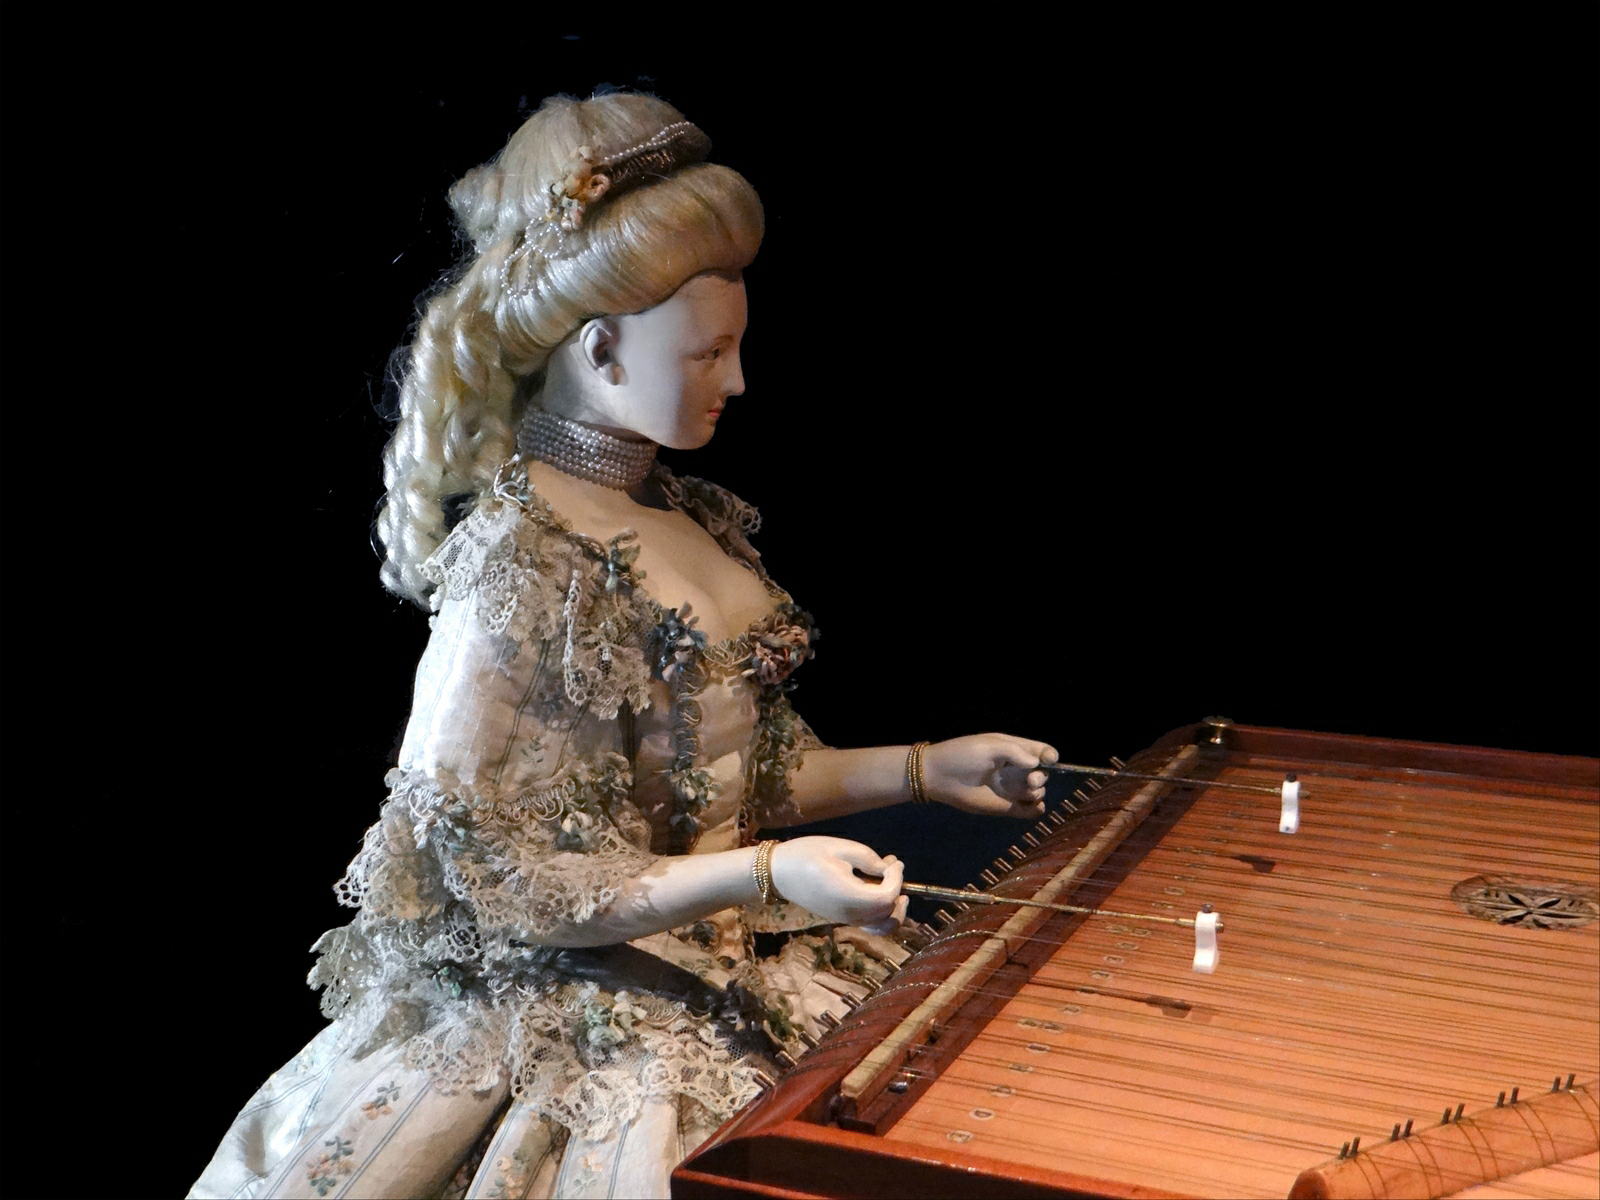 a sculpture sits holding a wooden musical instrument